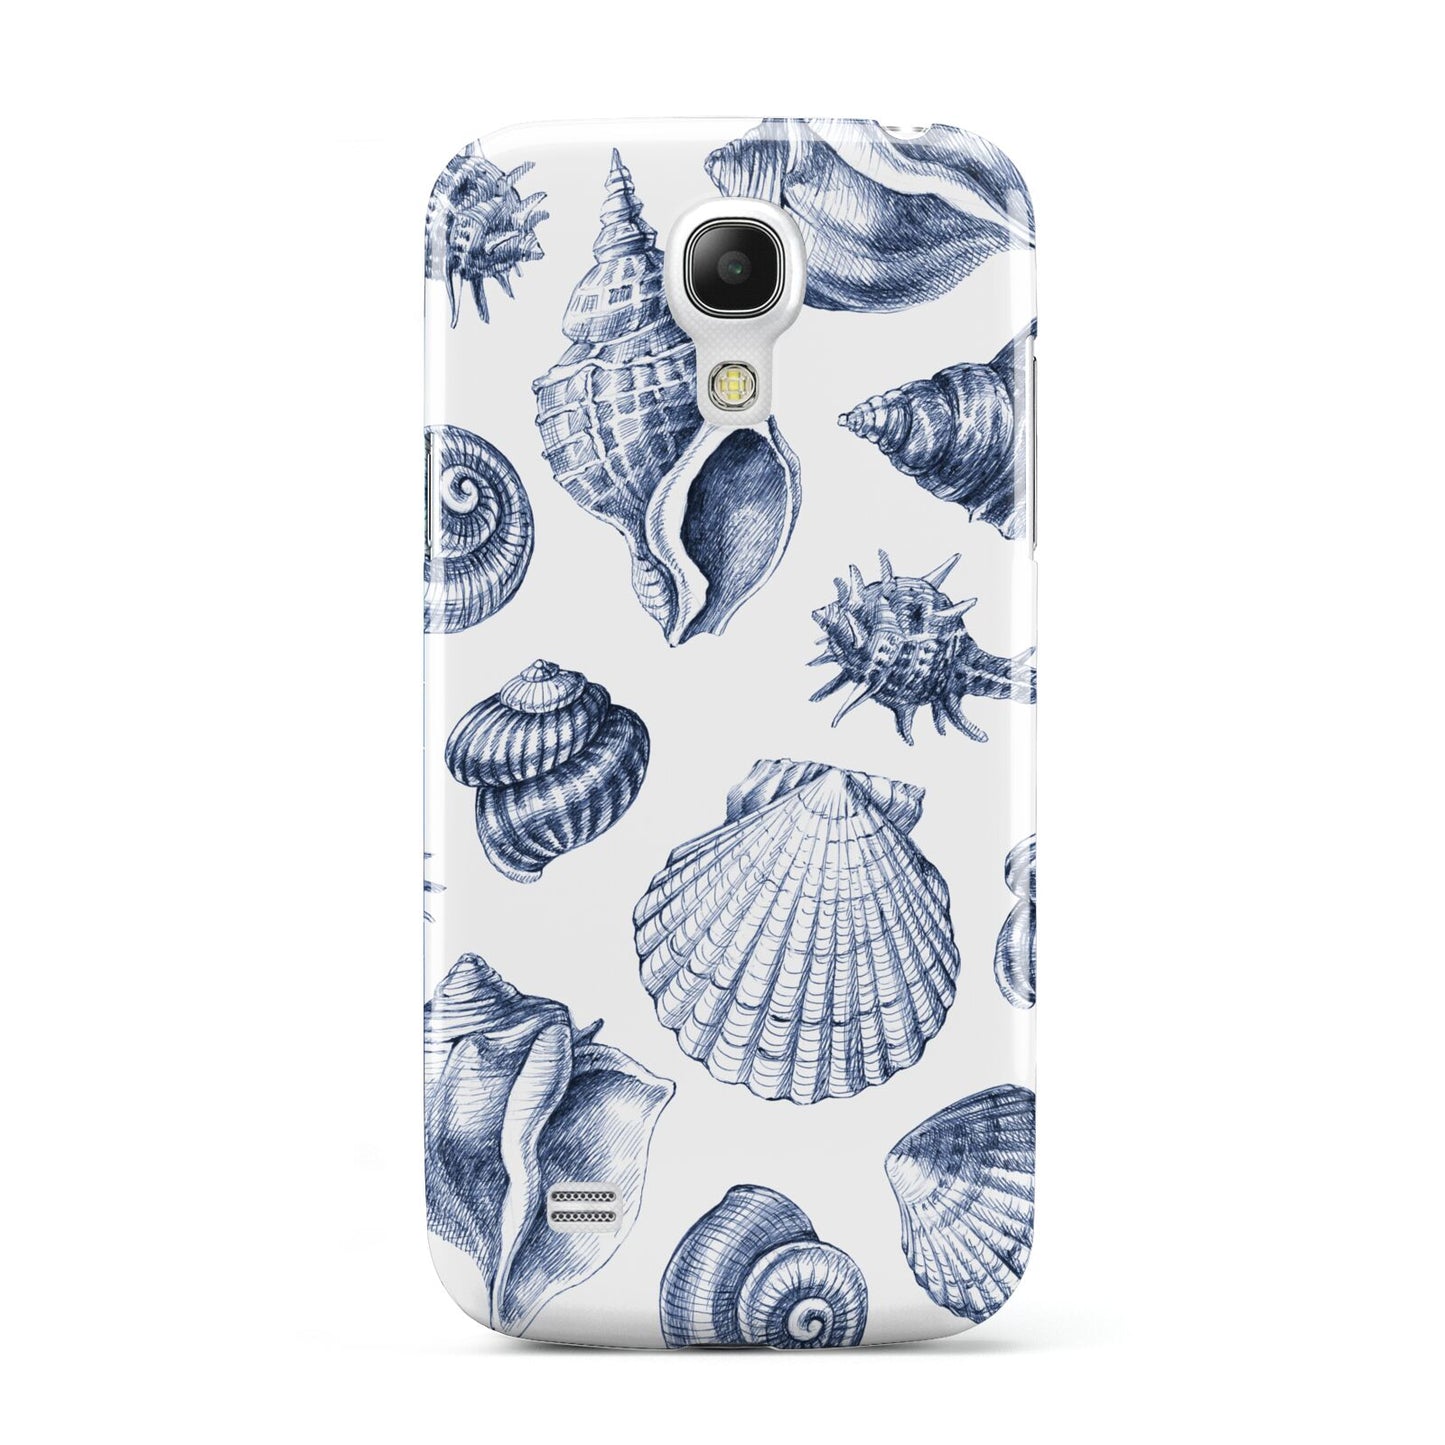 Shell Samsung Galaxy S4 Mini Case